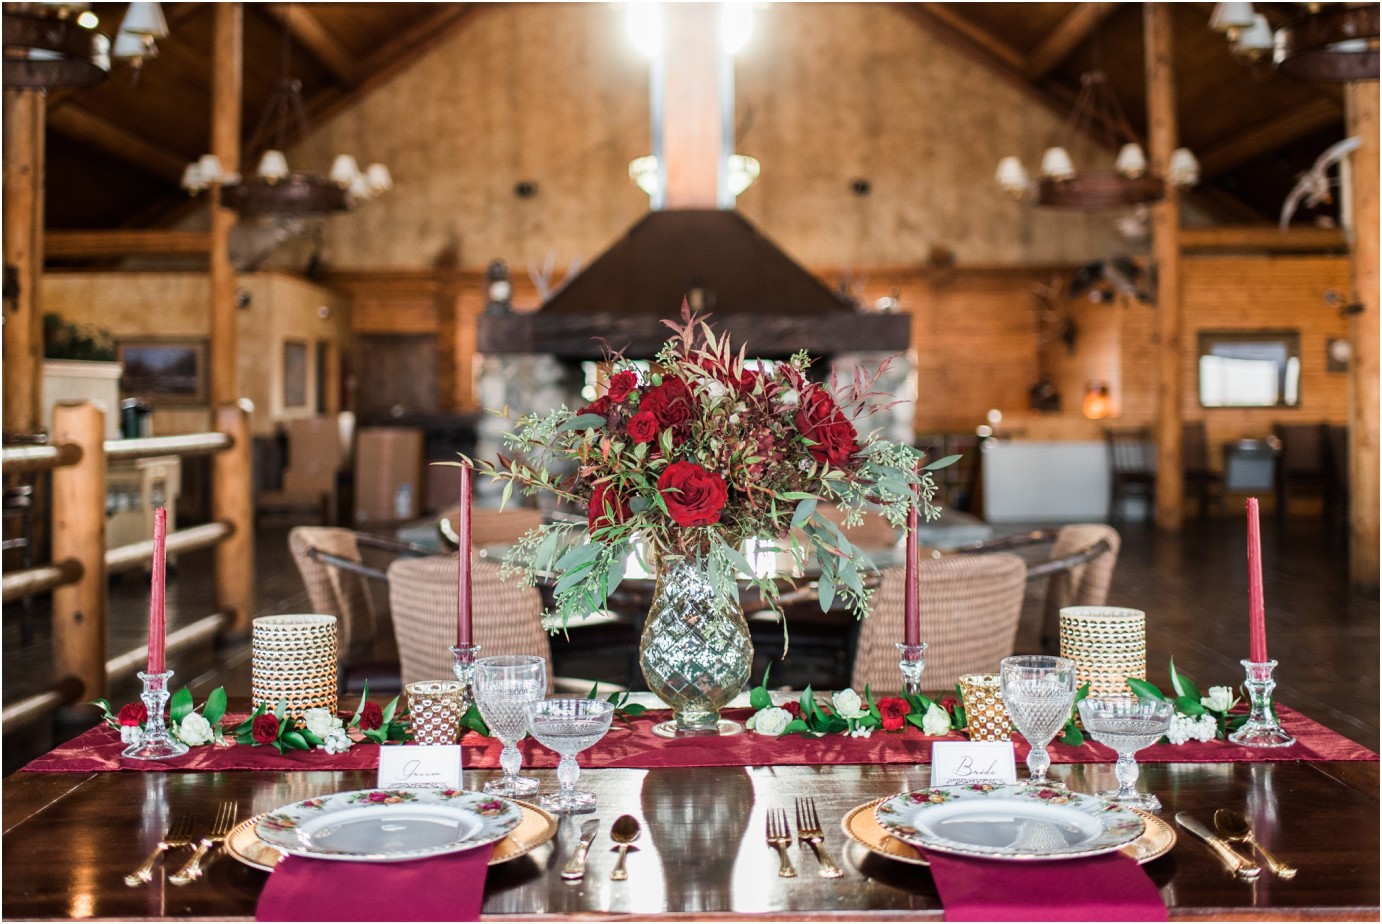 Eagle Lakes Lodge Wedding Inspiration Shoot sweetheart table wide view photo